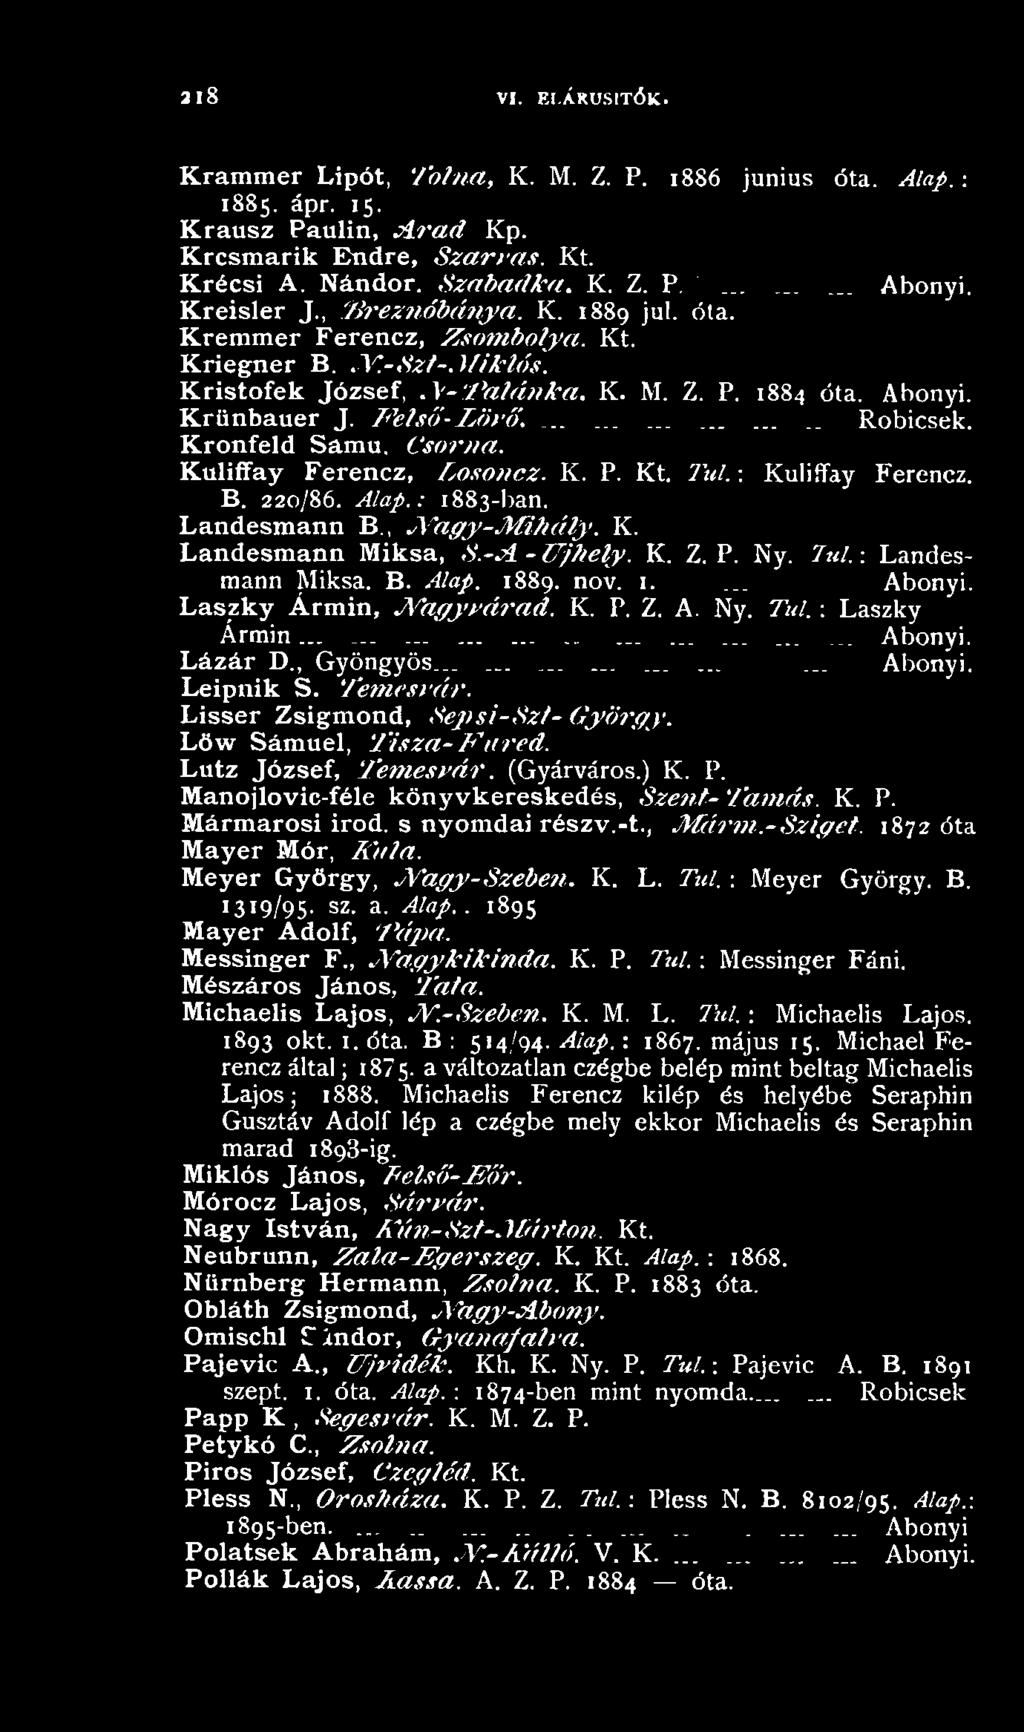 Kronfeld Samu, Csorna. Kuliffay Ferencz, Loson.cz. K. P. Kt. Túl. : Kuliffay Ferencz. B. 220/86. Alap.: 1883-ban. Landesmann B., N 'így- M ihály. K. Landesmann Miksa, S.-A -U jhely. K. Z. P. Ny. Túl.-. Landesmann Miksa. B. Alap. 1889.